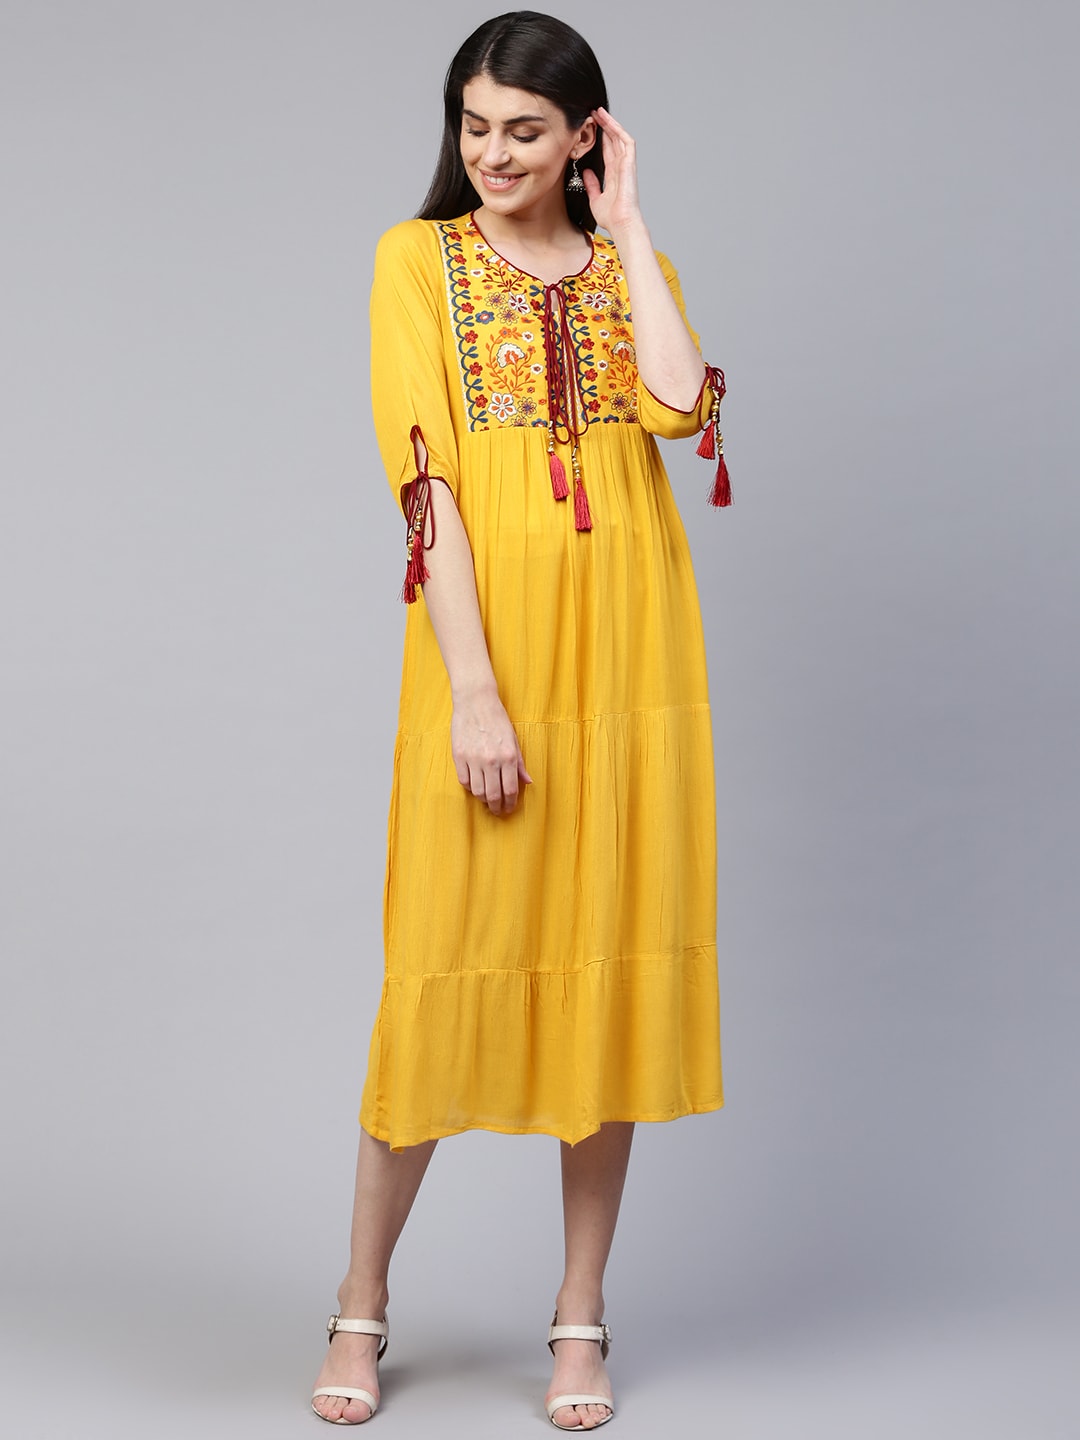 RANGMAYEE Women Yellow Yoke Design Tiered A-Line Dress Price in India